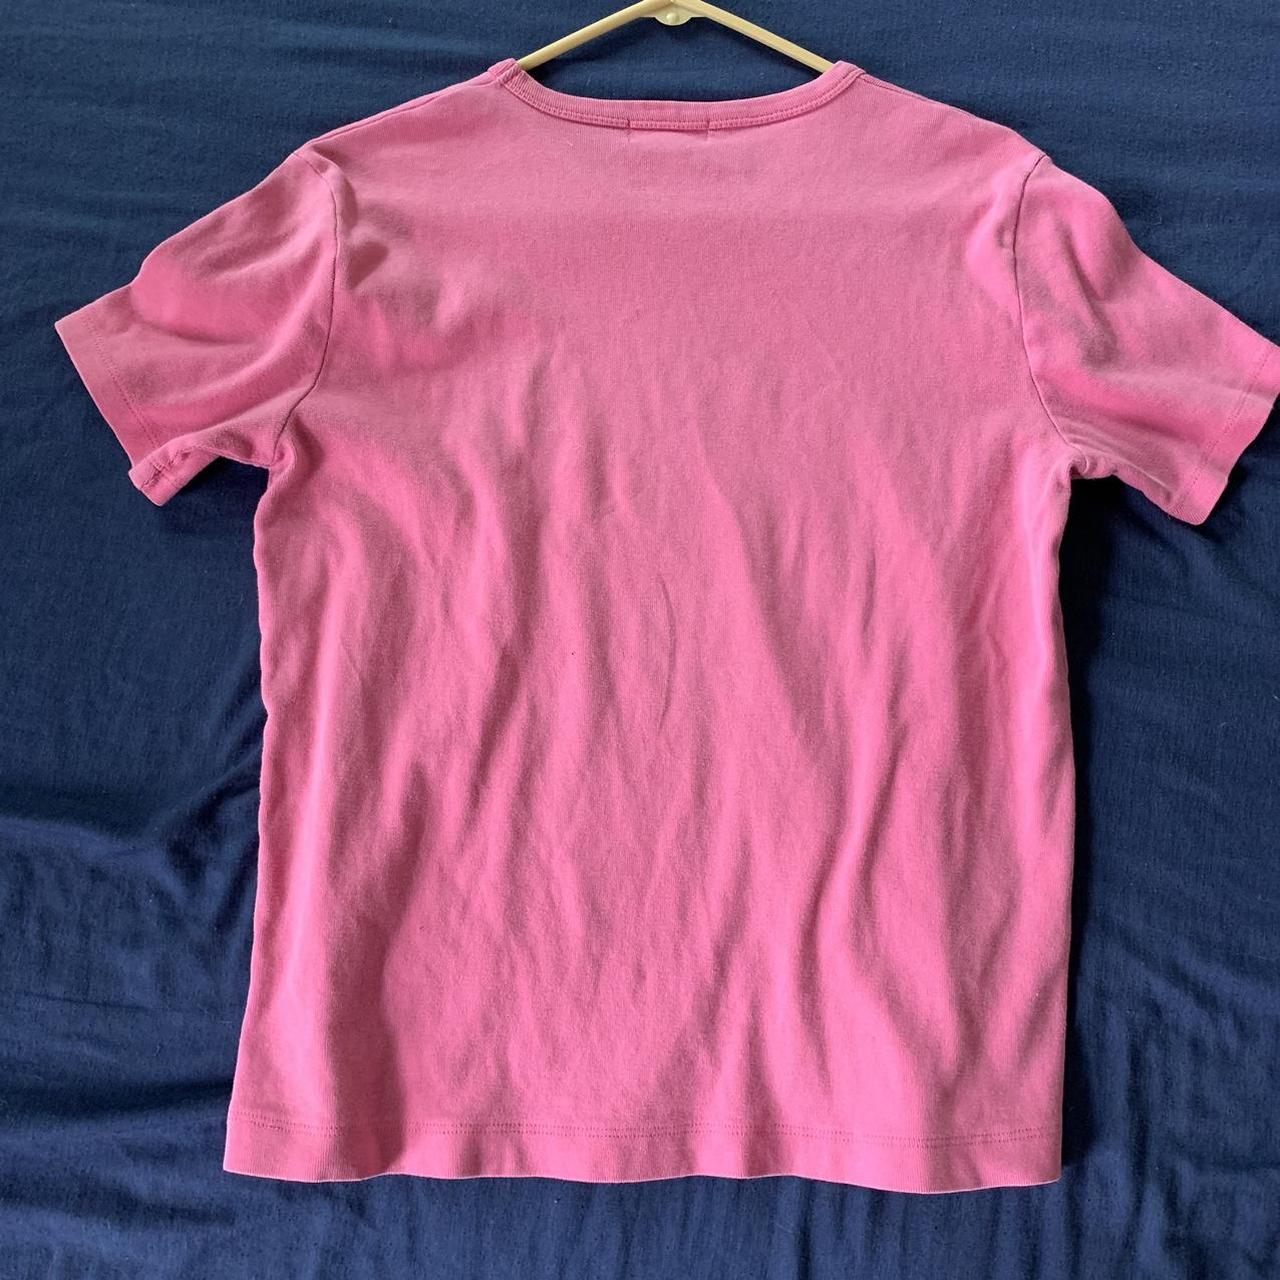 Pink Pastel | Shirt | Large Fit Like Medium Good... - Depop